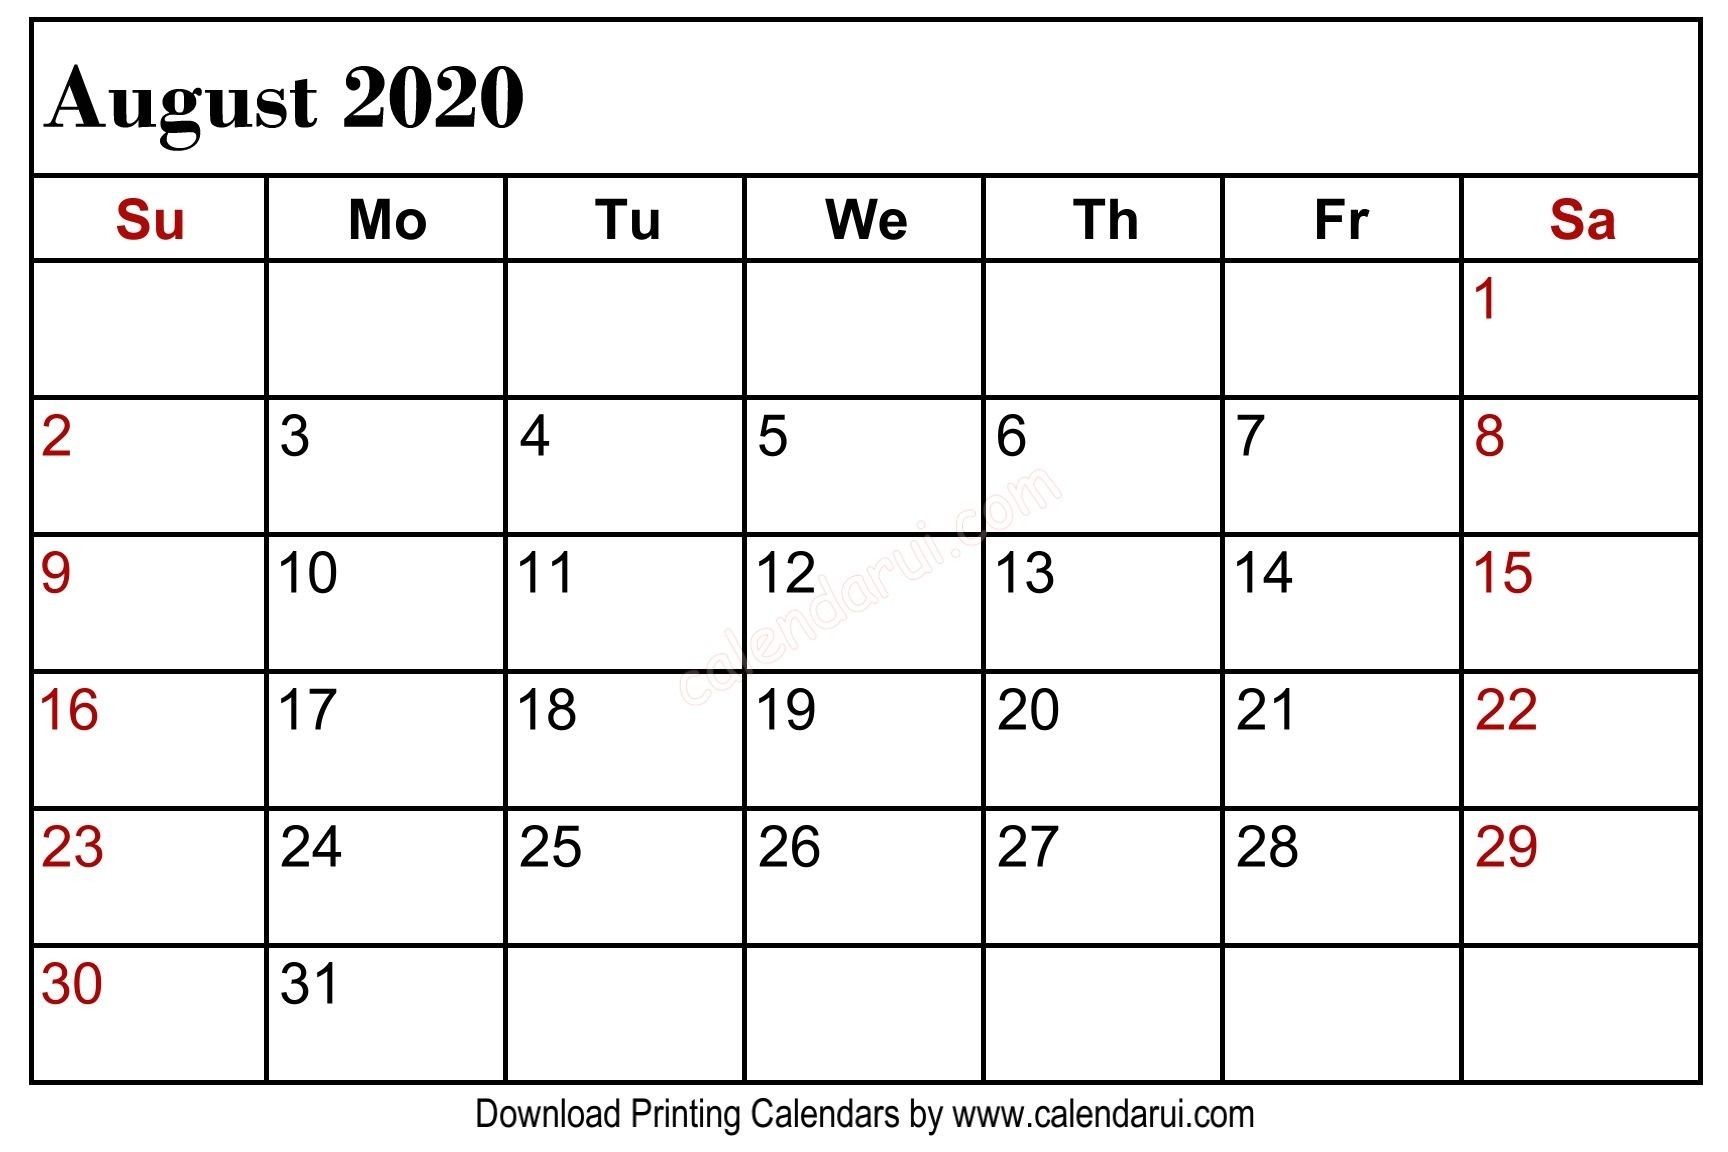 August 2019 Blank Calendar Printable Template | Blank-August To December Calendar Template 2020